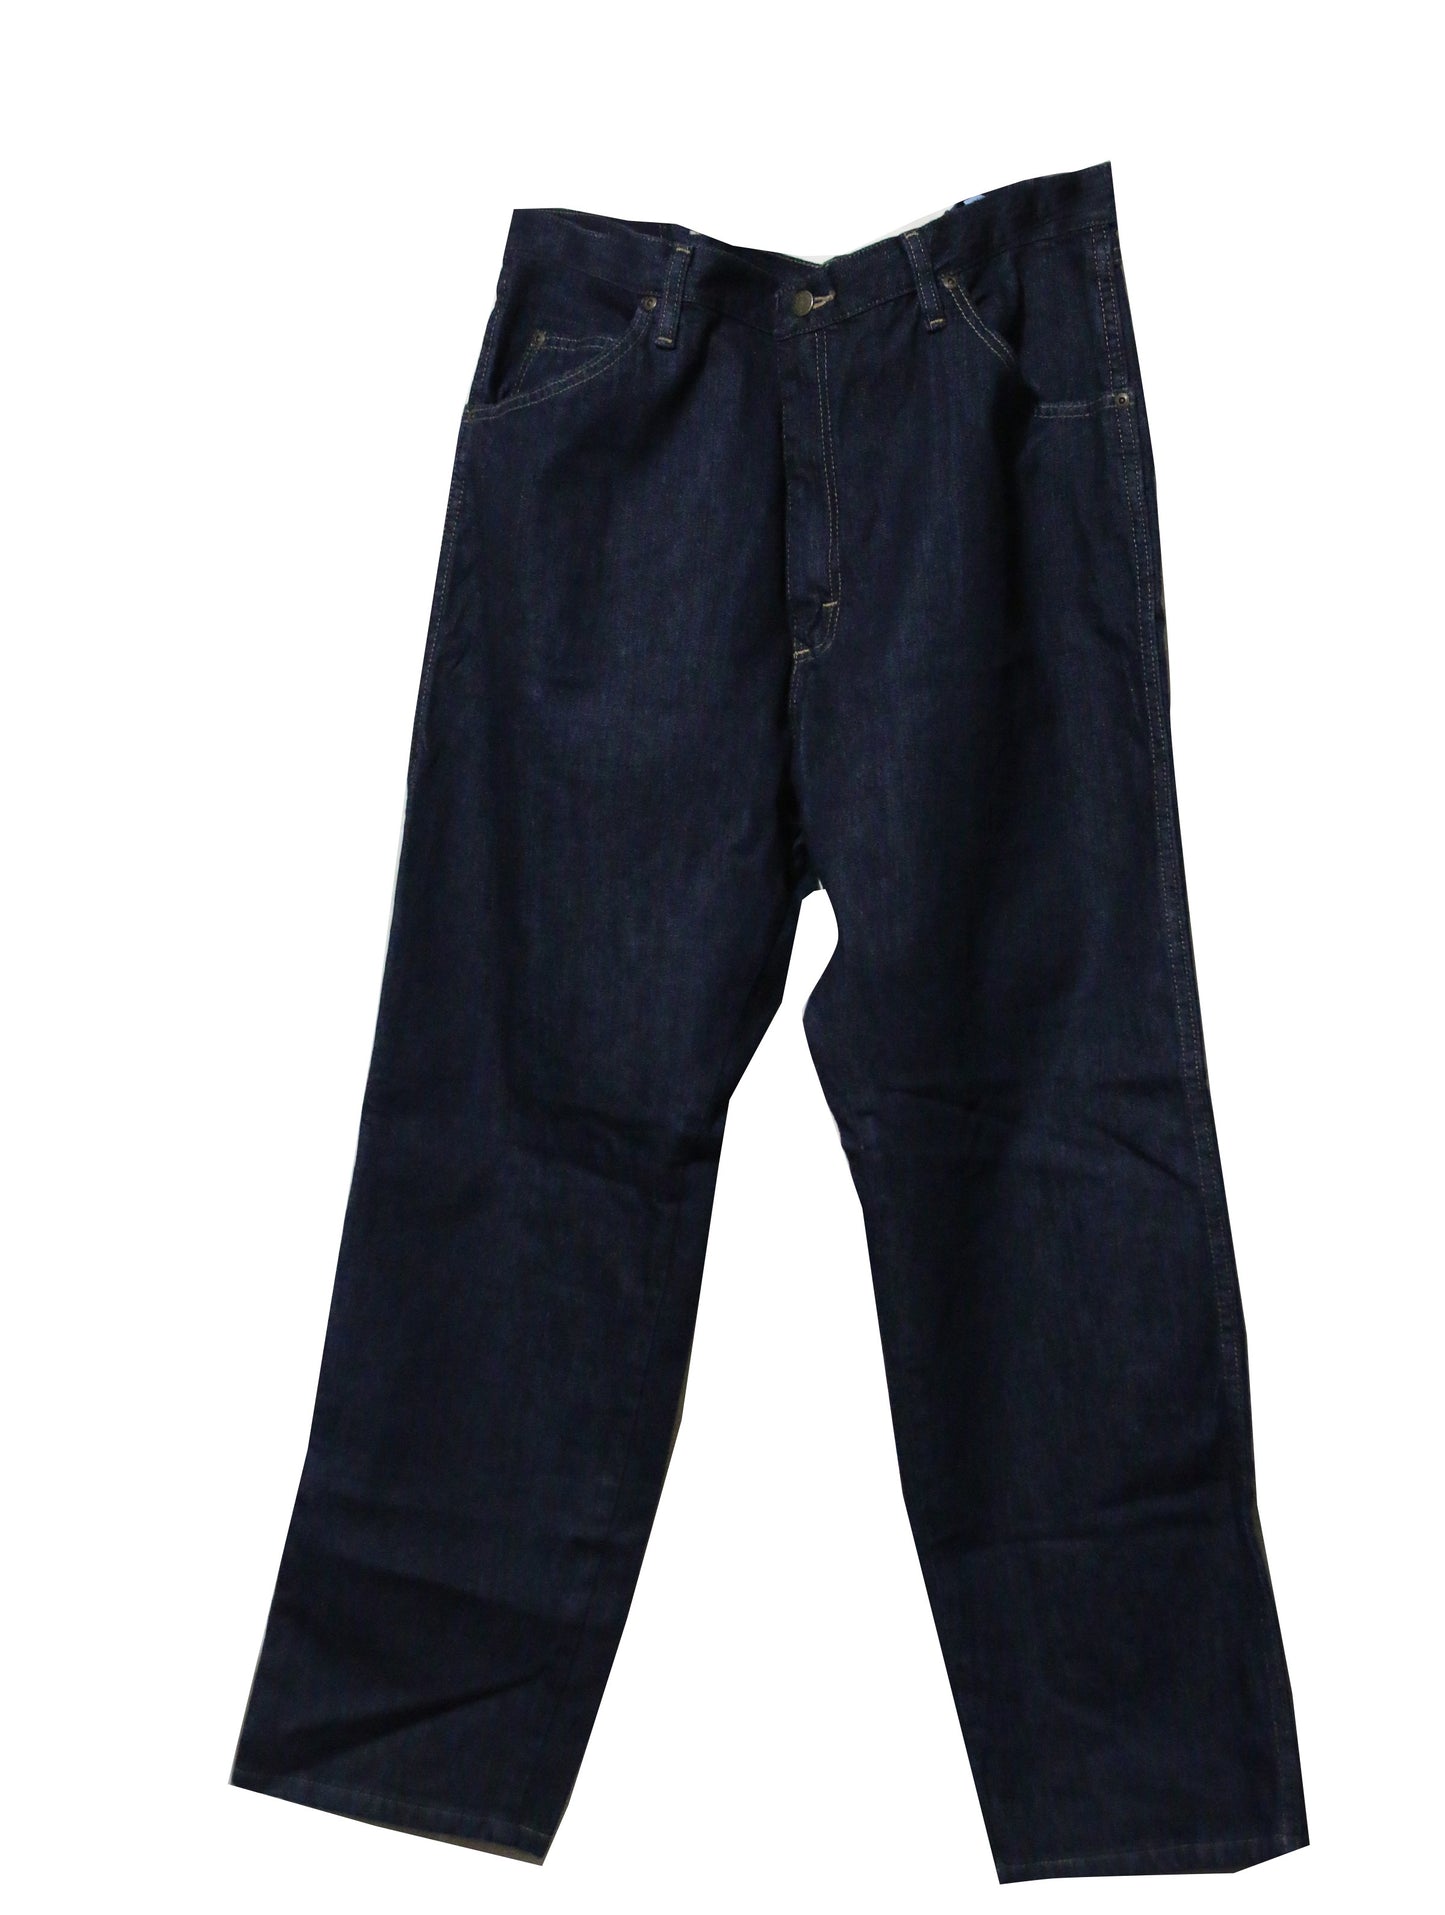 Men's Wrangler Five Star Premium Demin Regular Fit Jeans